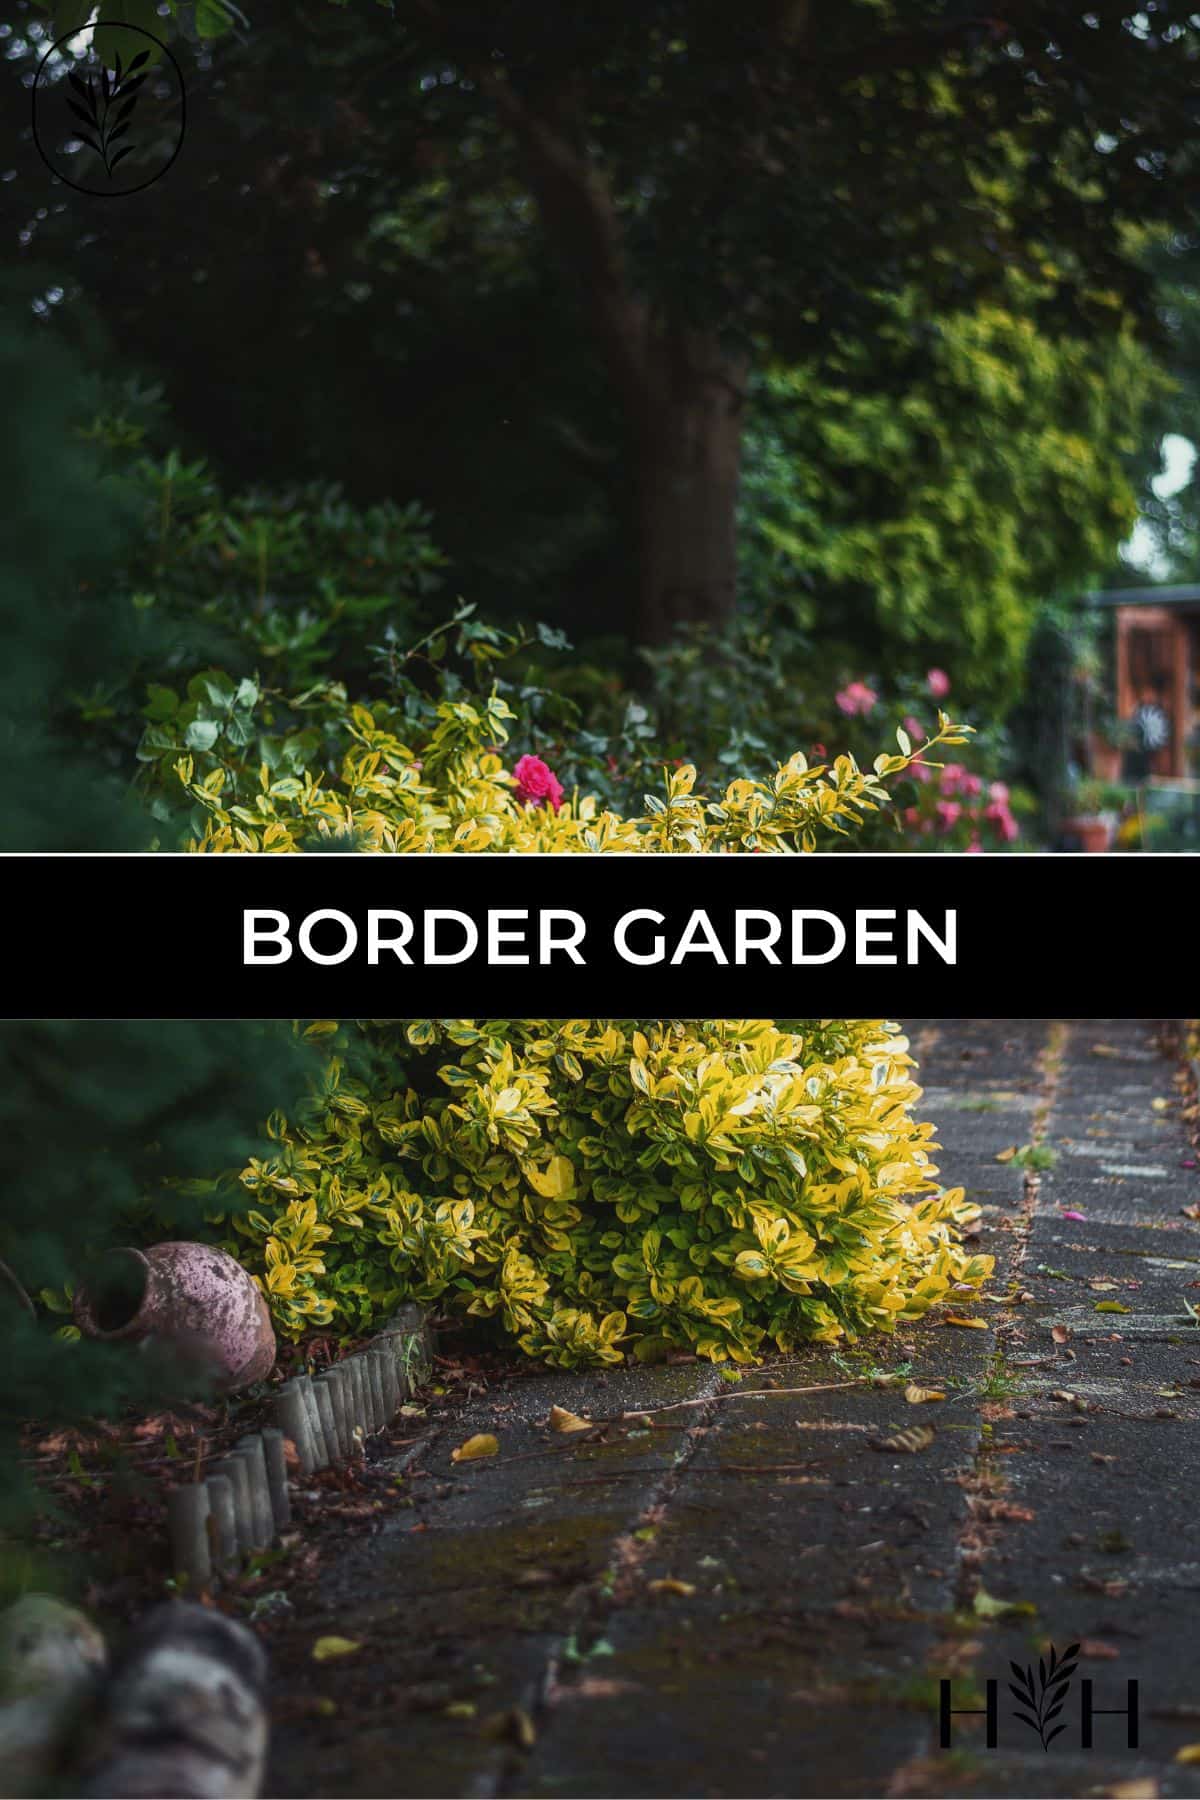 Border garden via @home4theharvest